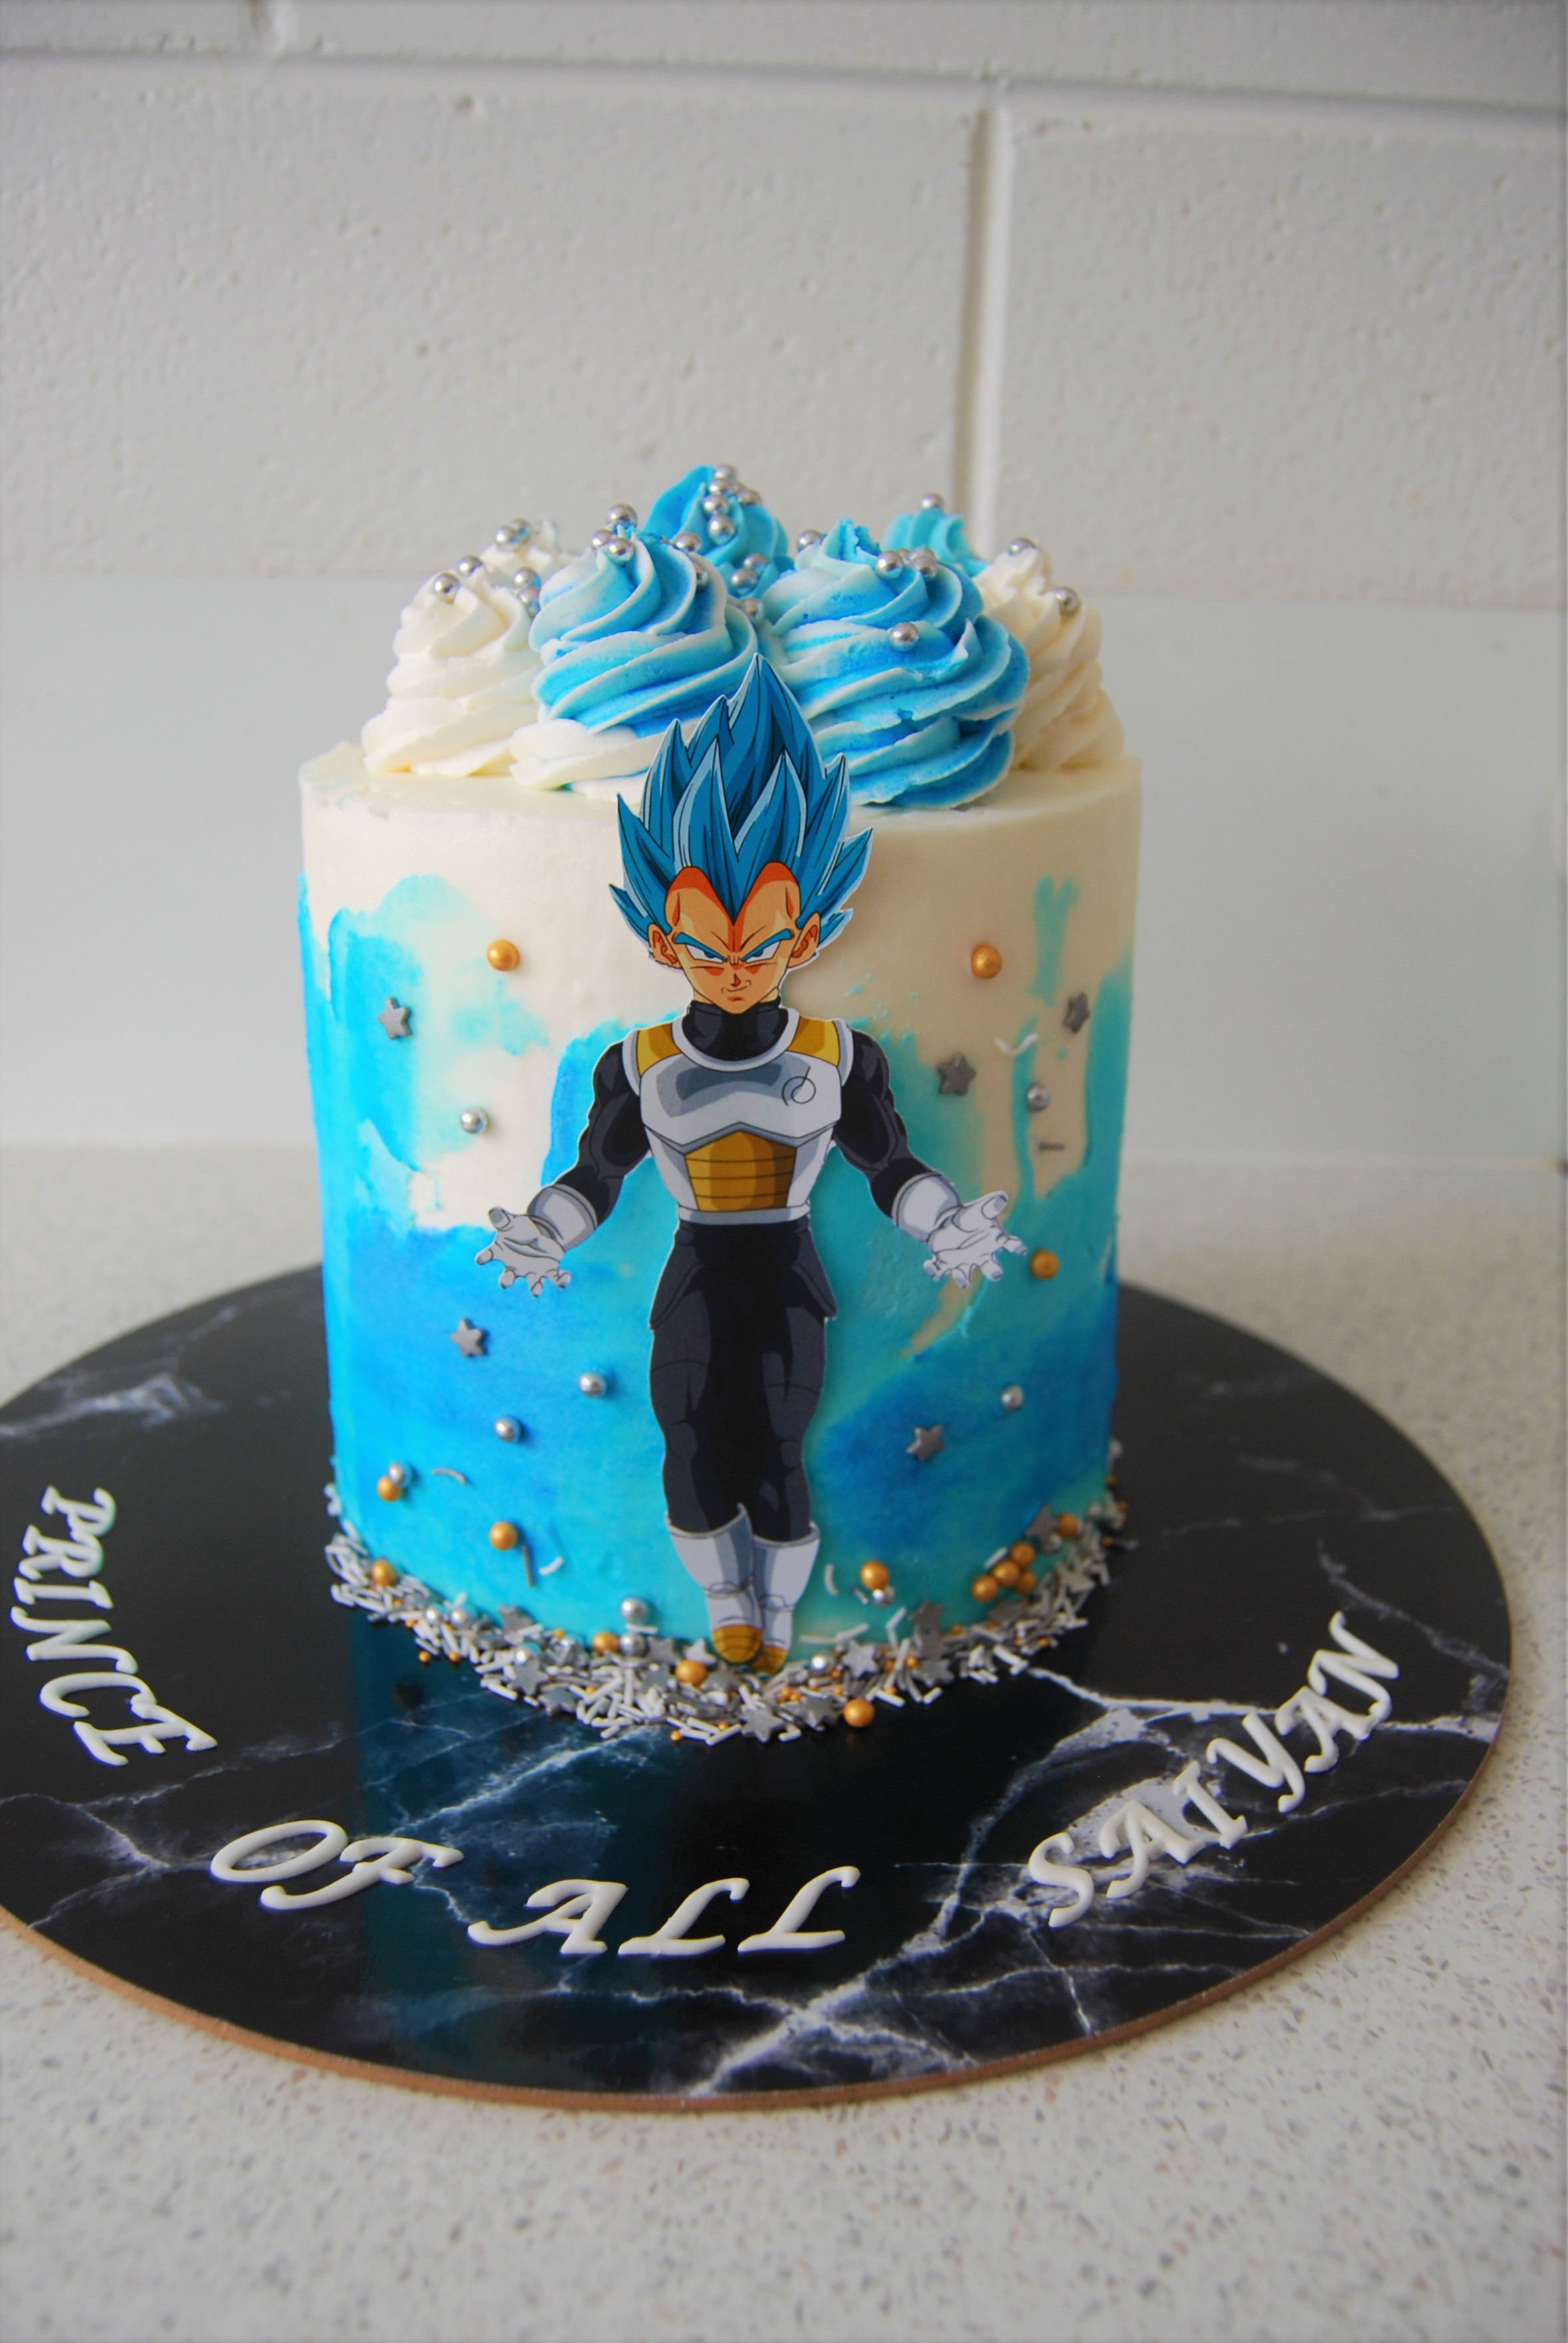 Dragon Ball Z cake $250 • Temptation Cakes | Temptation Cakes